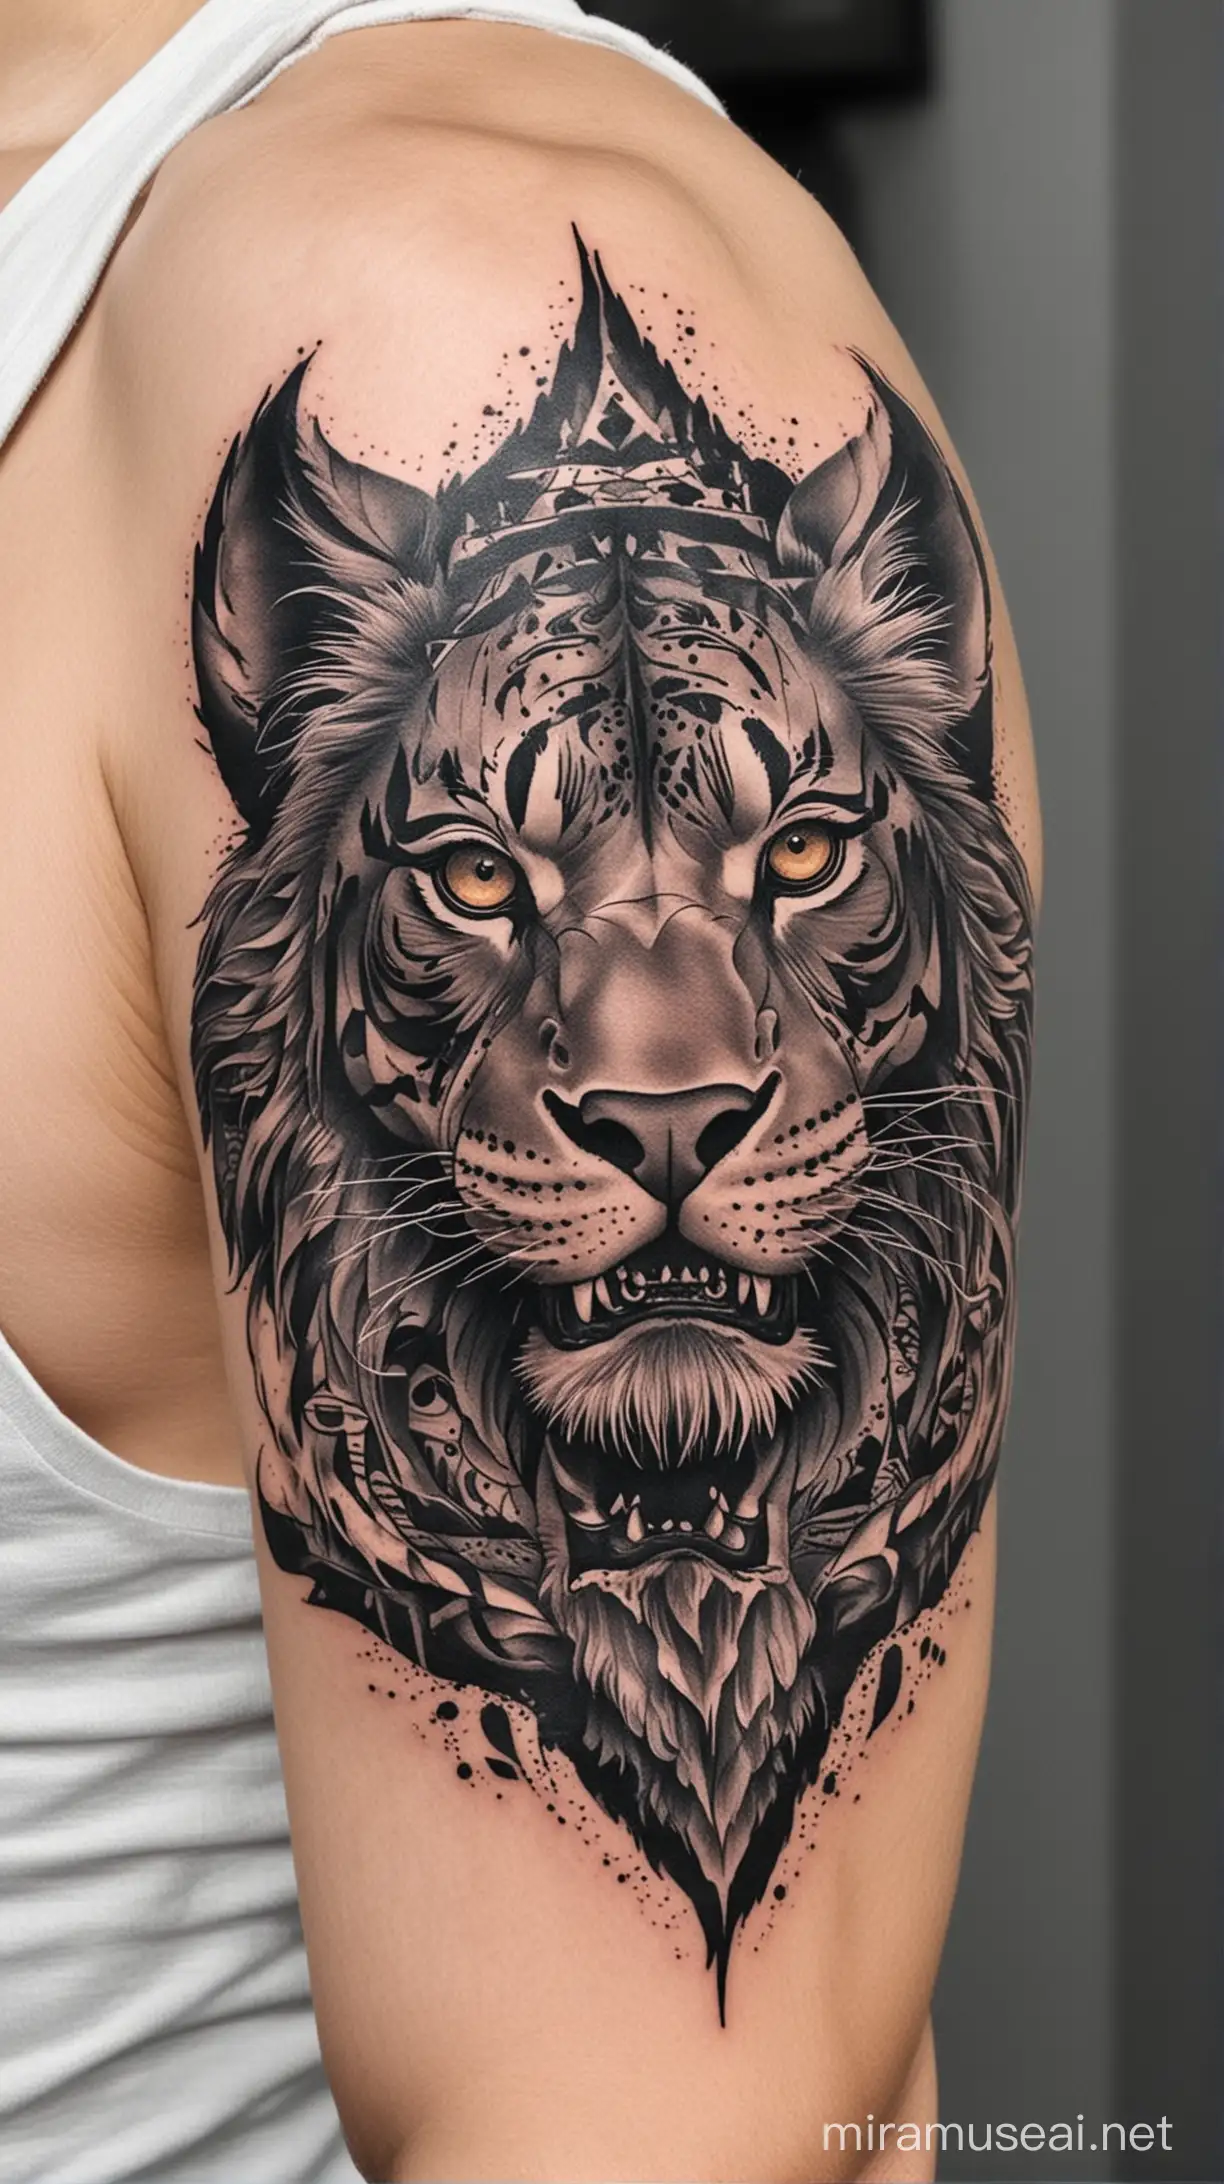 Striking Black and Grey Tattoo Design